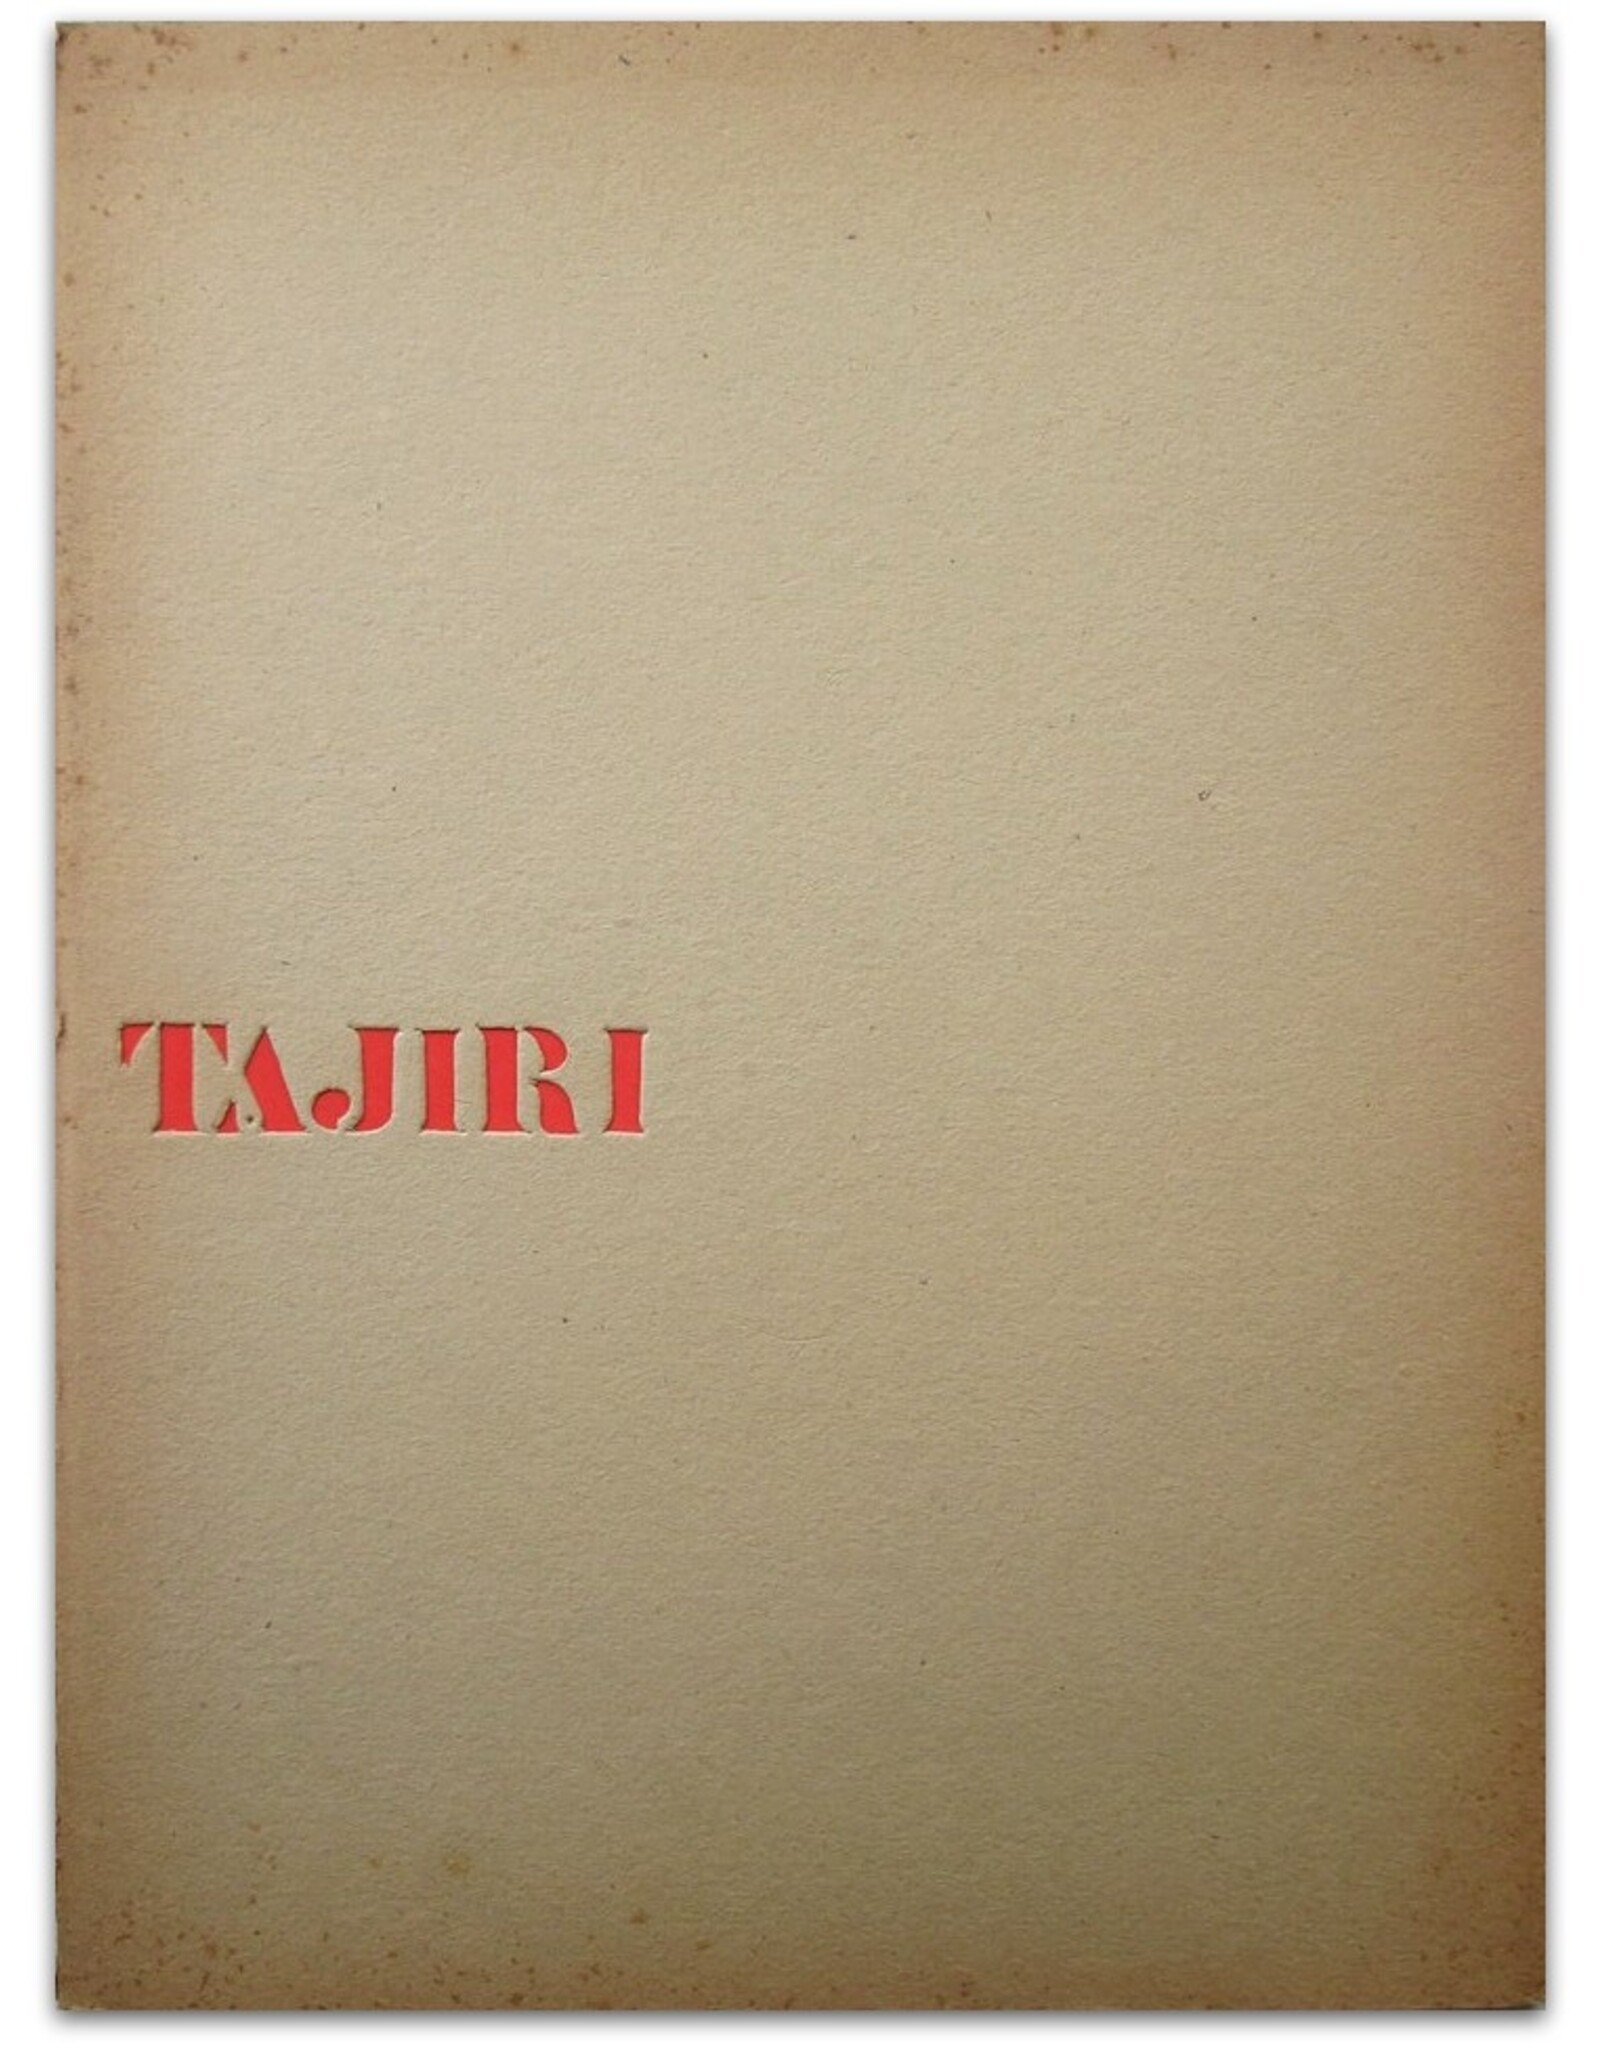 Aldo van Eyck & Juriaan Schrofer - Tajiri. Sculptures: 2 March - 2 April 1960